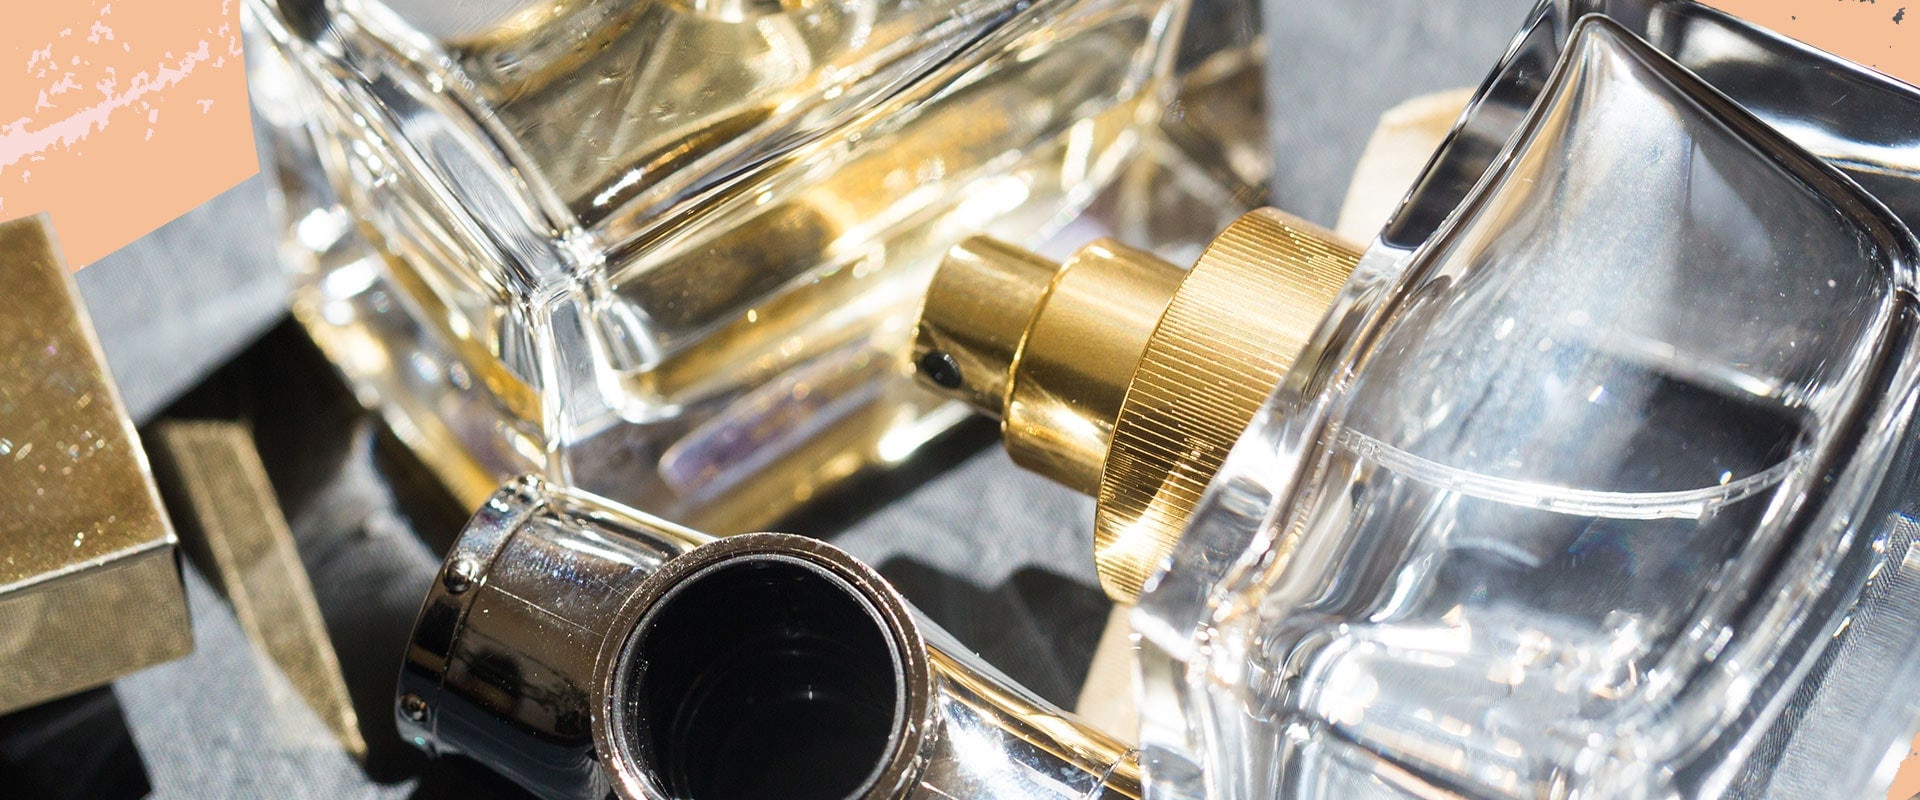 Designer Fragrance Ingredients: An In-Depth Look